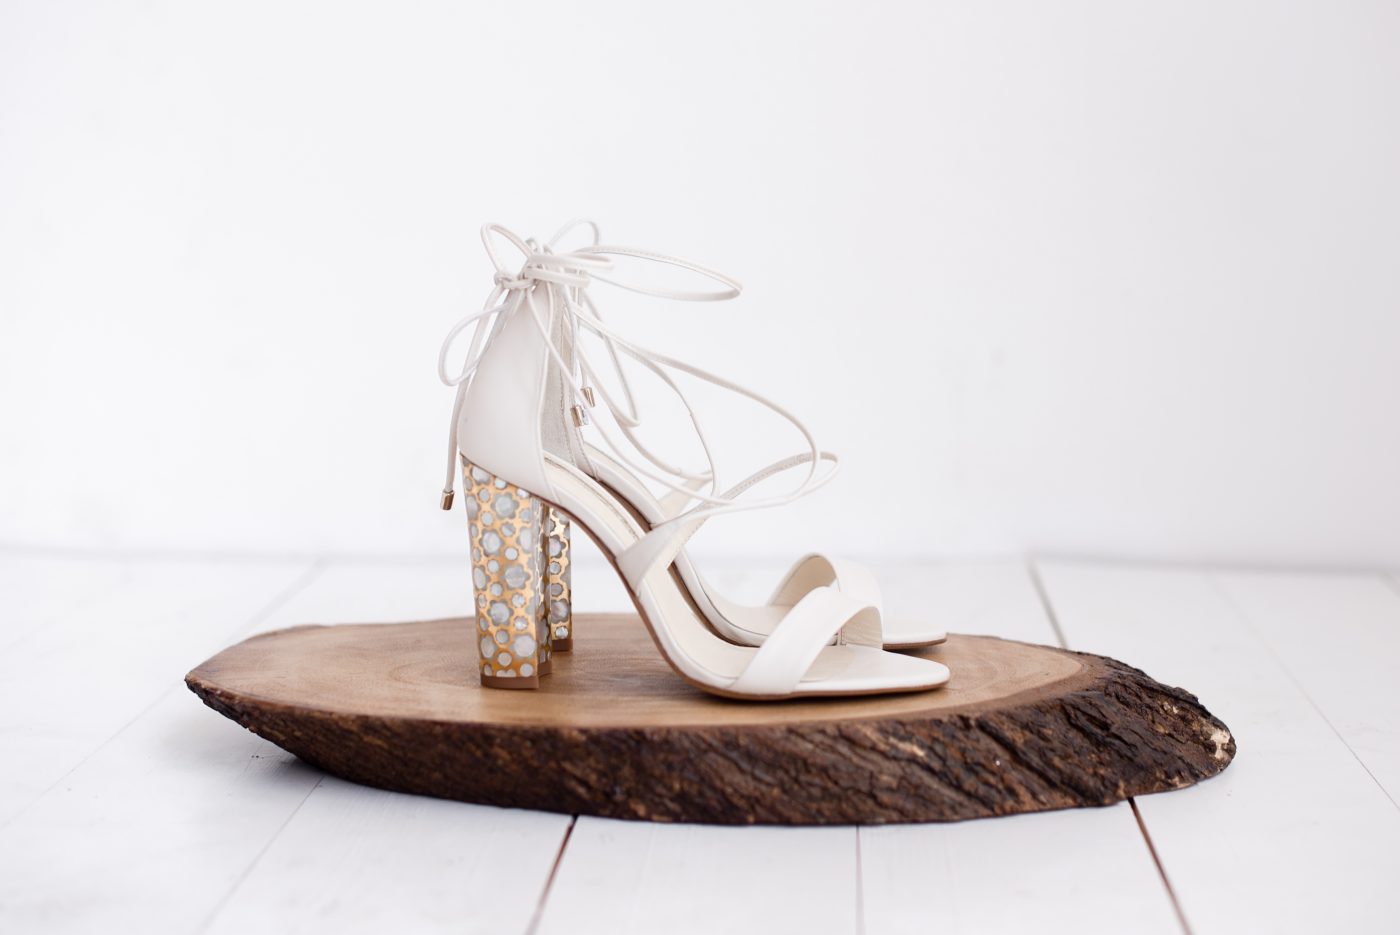 <a href="https://freyarose.com/collections/wedding-shoes/products/soraya-ivory" target="_blank" rel="noopener noreferrer">Soraya Ivory Sandal by Freya Rose</a> £695